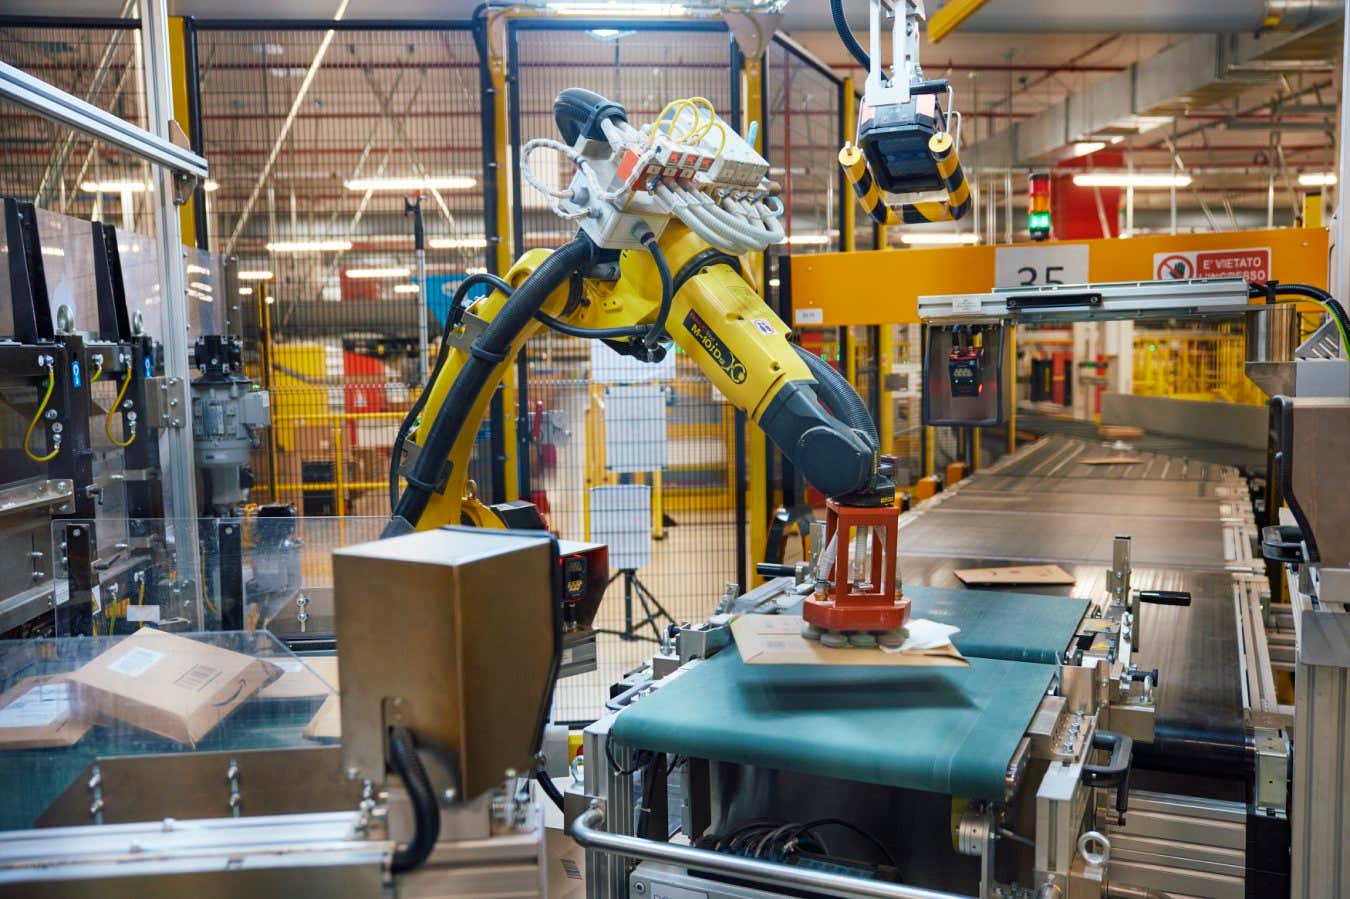 Will Amazon's robotic revolution spark a new wave of job losses?